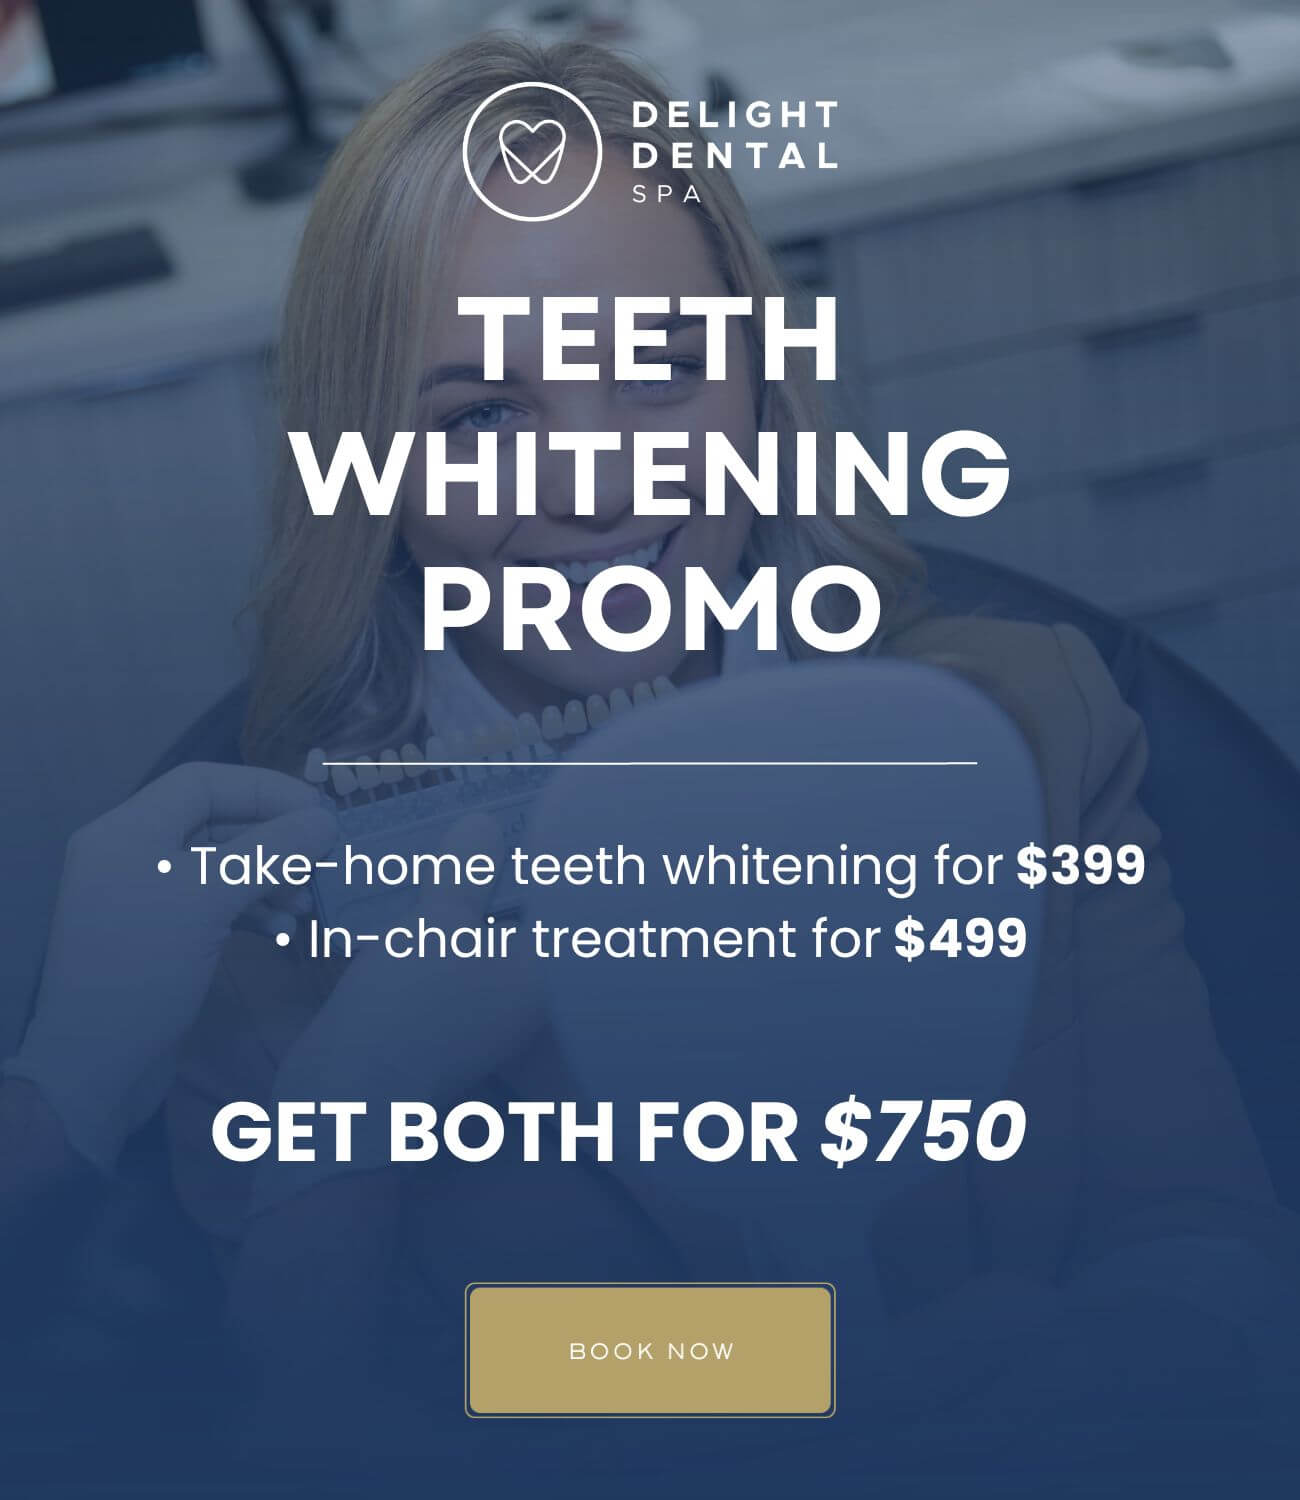 Teeth Whitening Promo In Mascot Sydney In Delight Dental Spa